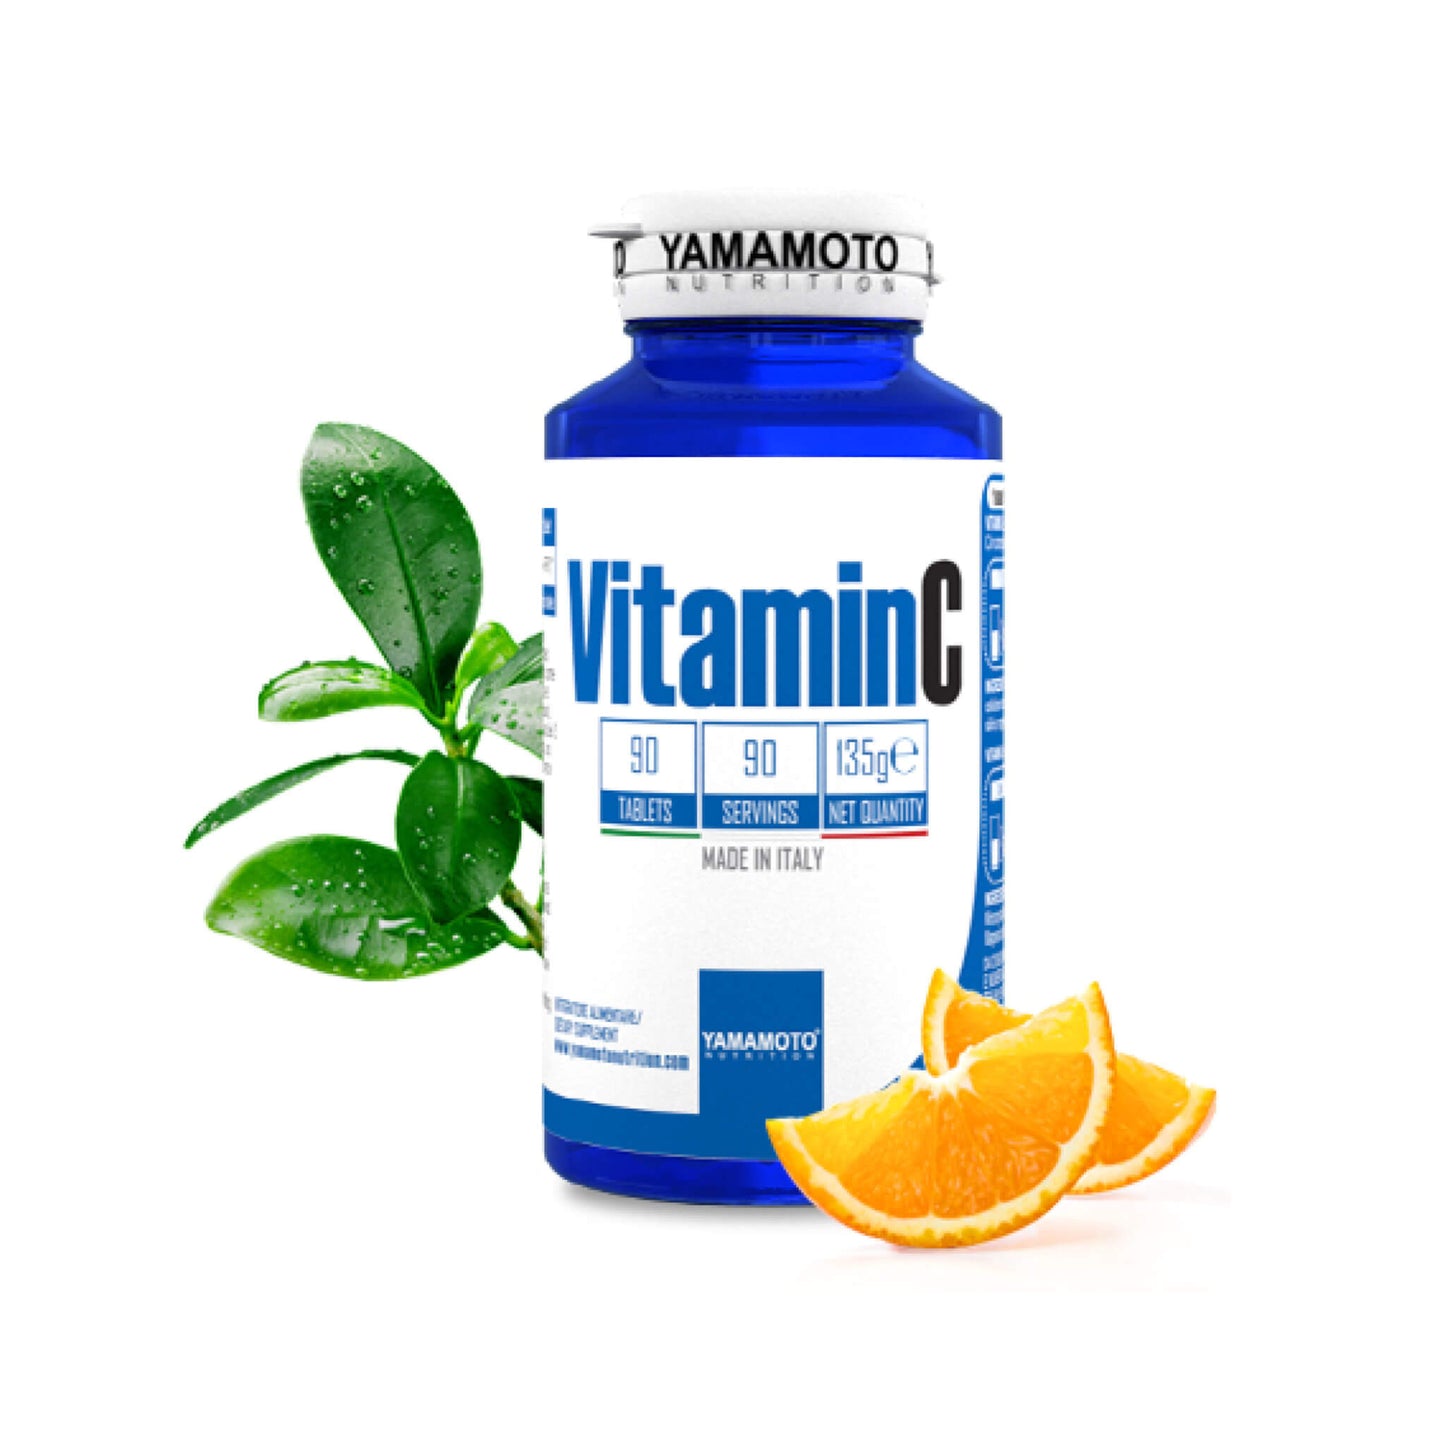 Yamamoto Vitamine C 1000